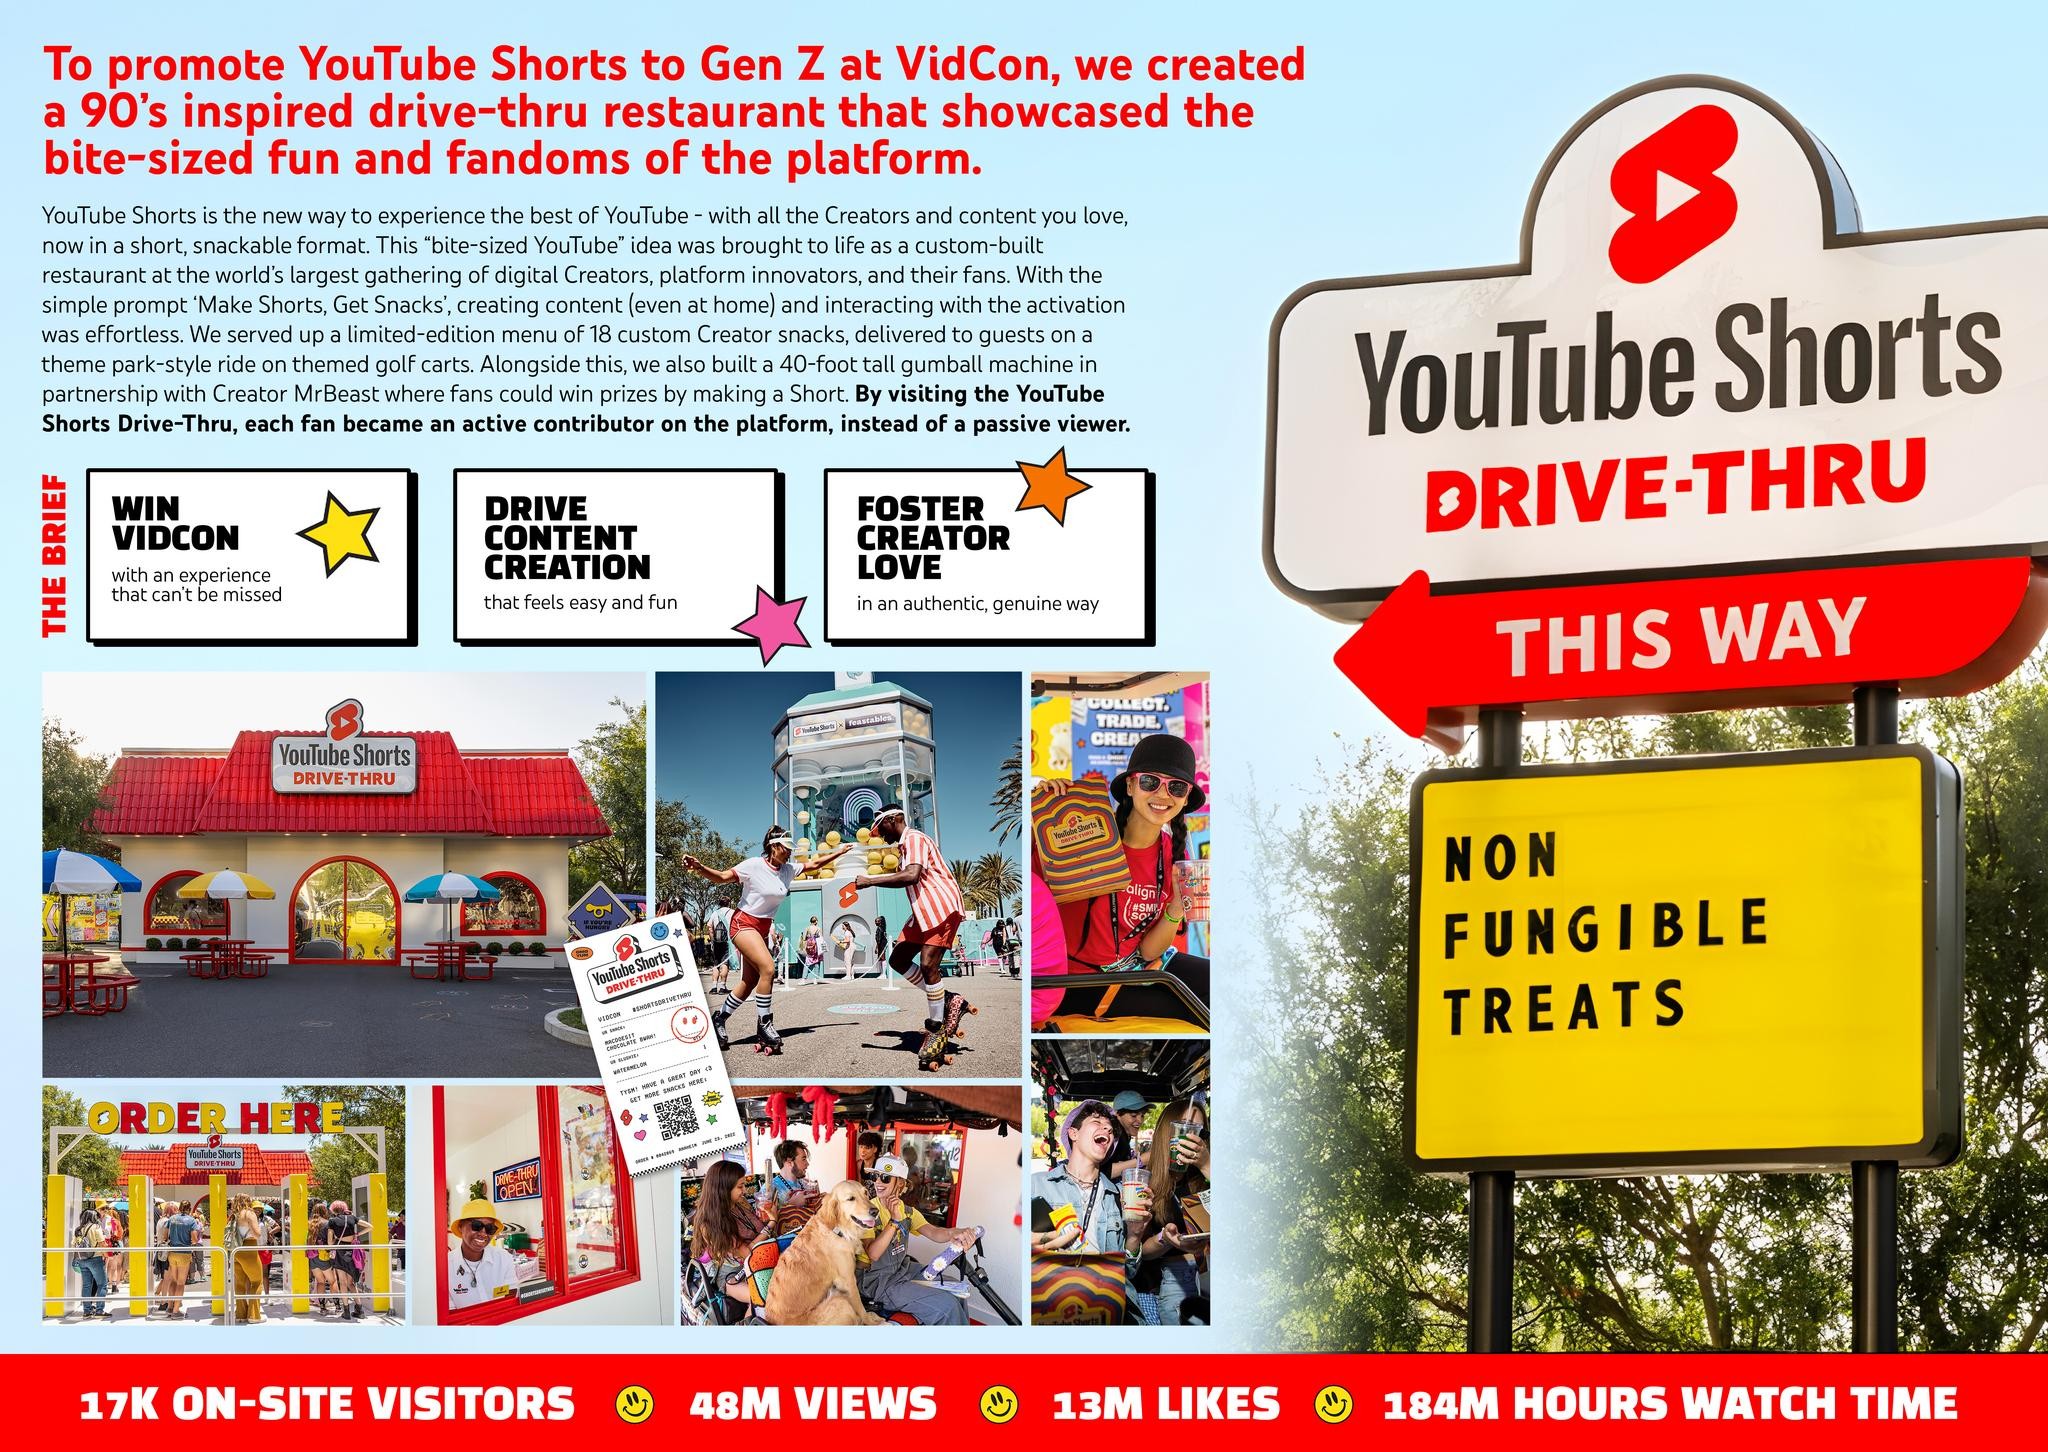 YouTube Shorts Drive-Thru at VidCon